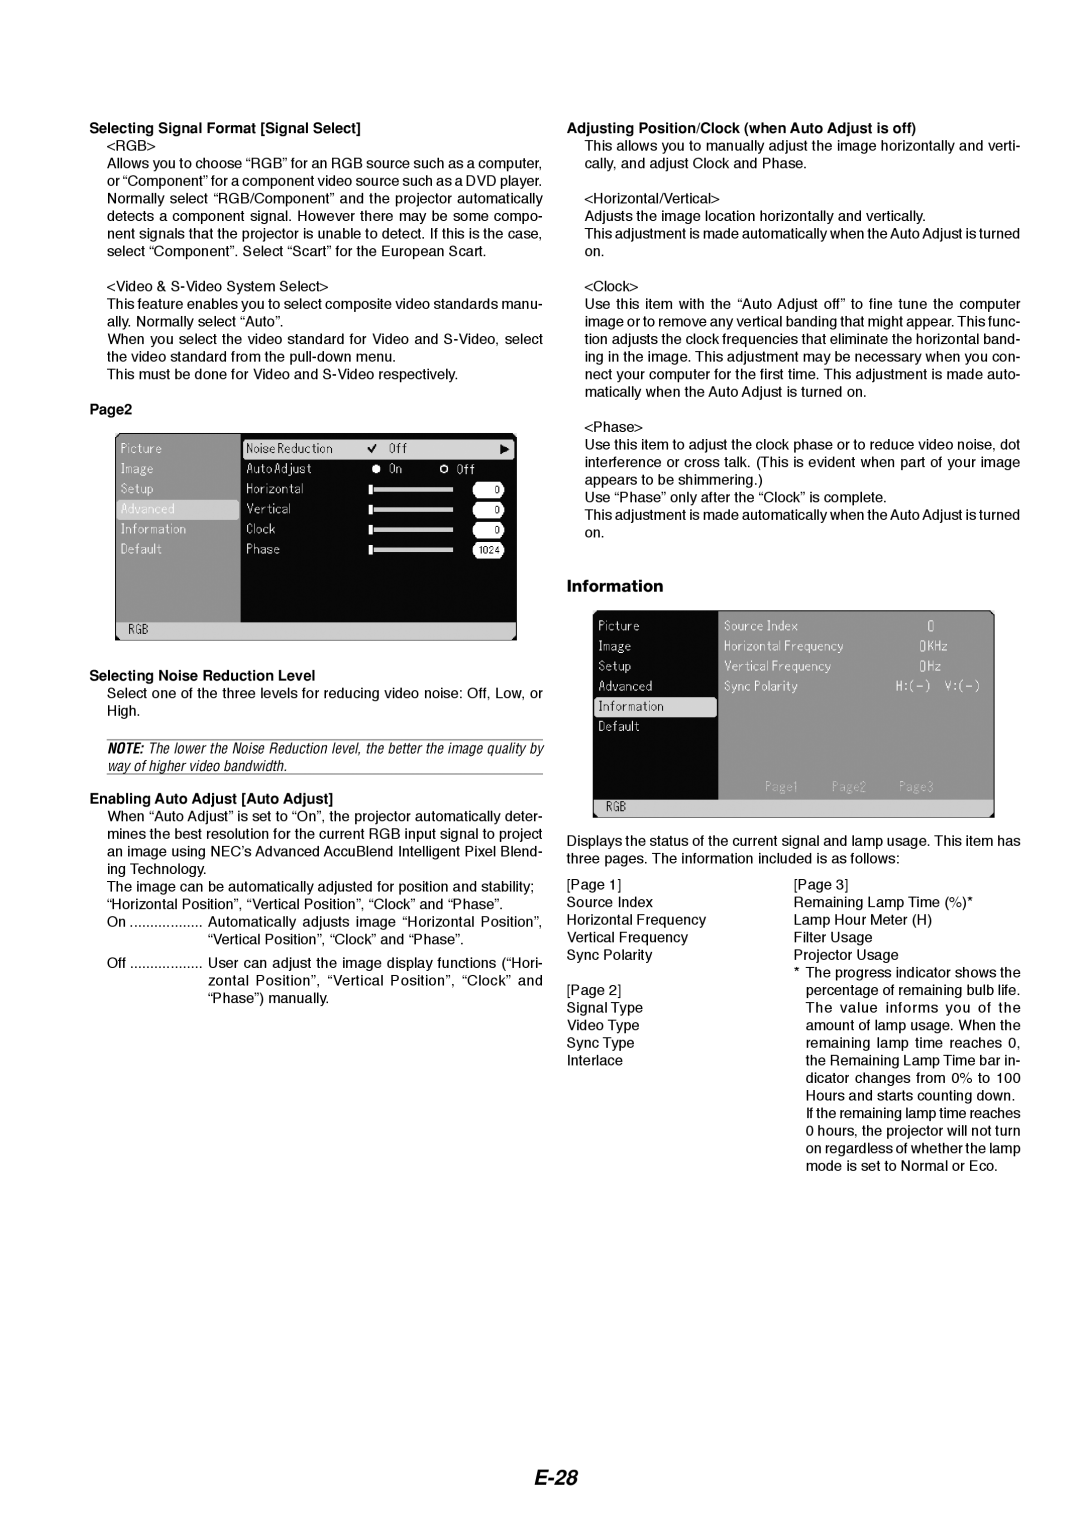 Dukane 8766 manual E-28, Information, Selecting Signal Format Signal Select, Page2 Selecting Noise Reduction Level 